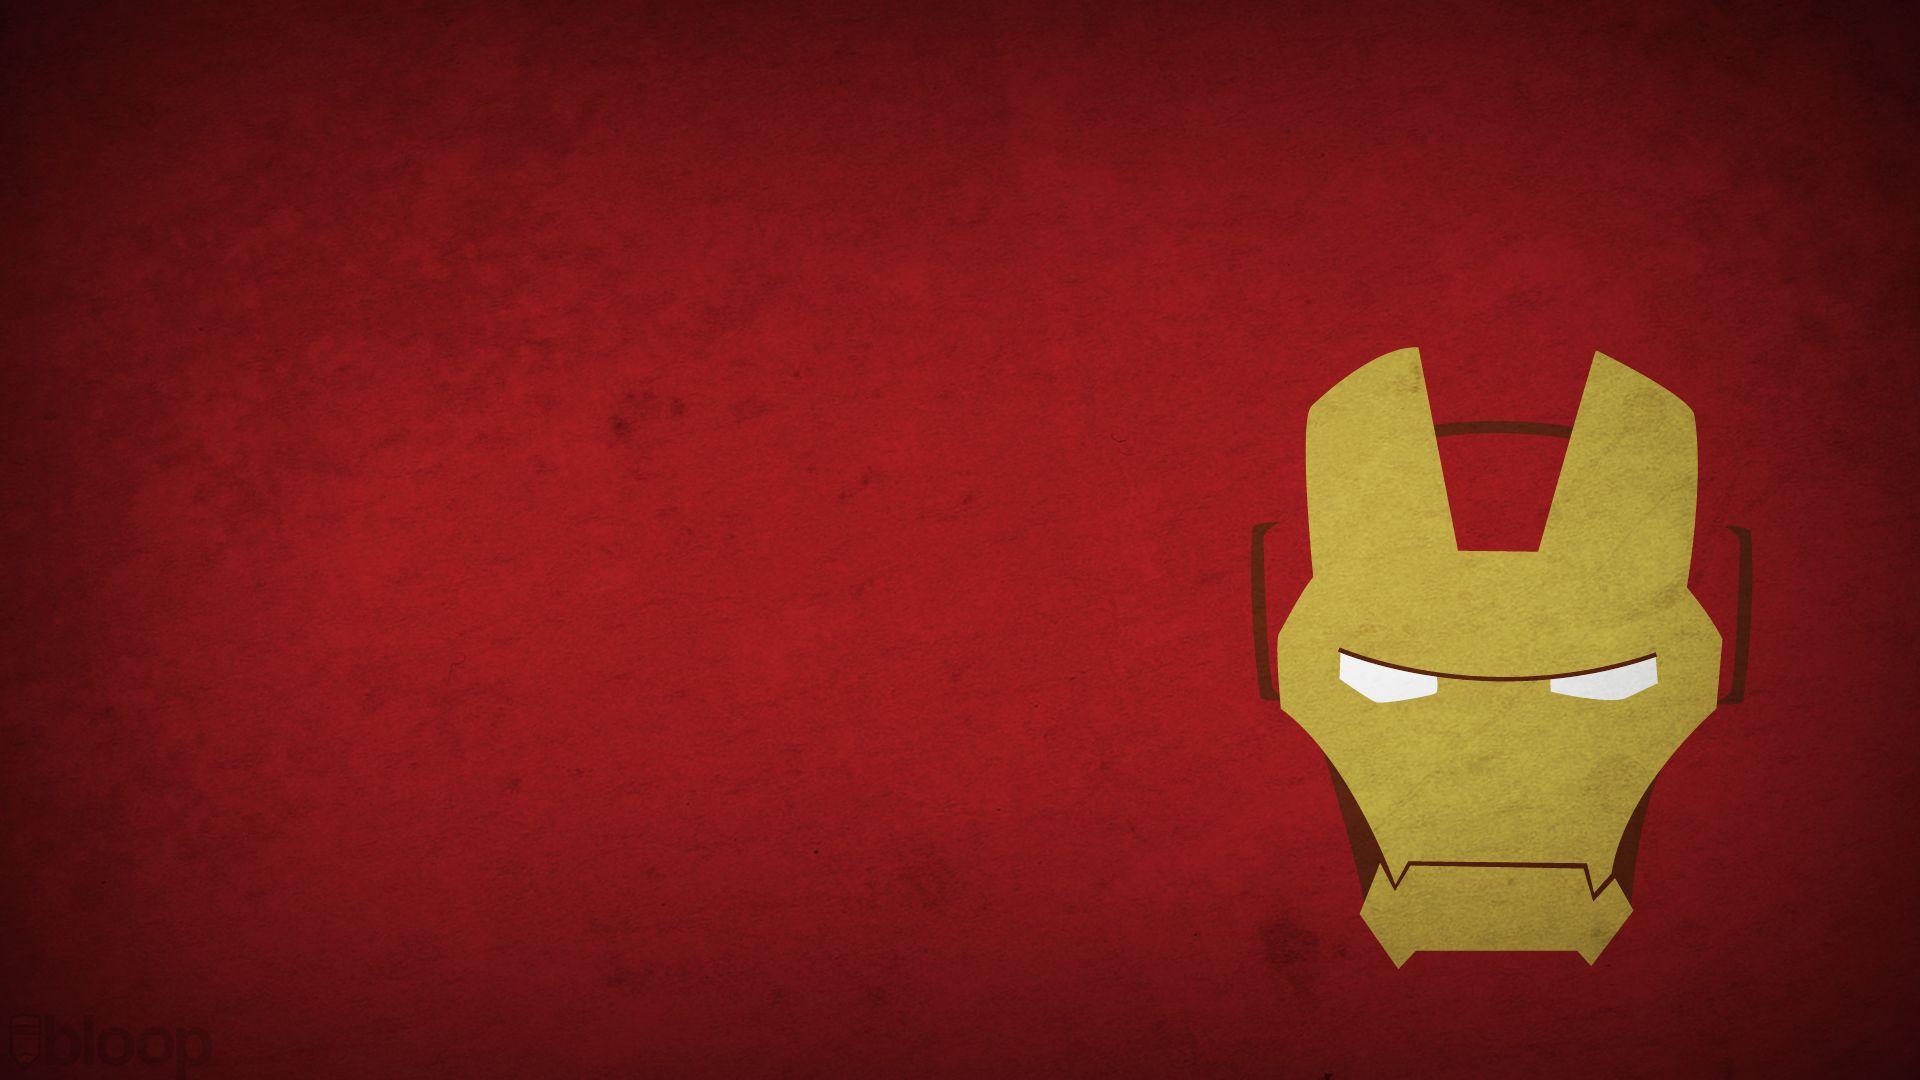 Iron man. Marvel wallpaper, Marvel image, Hero wallpaper